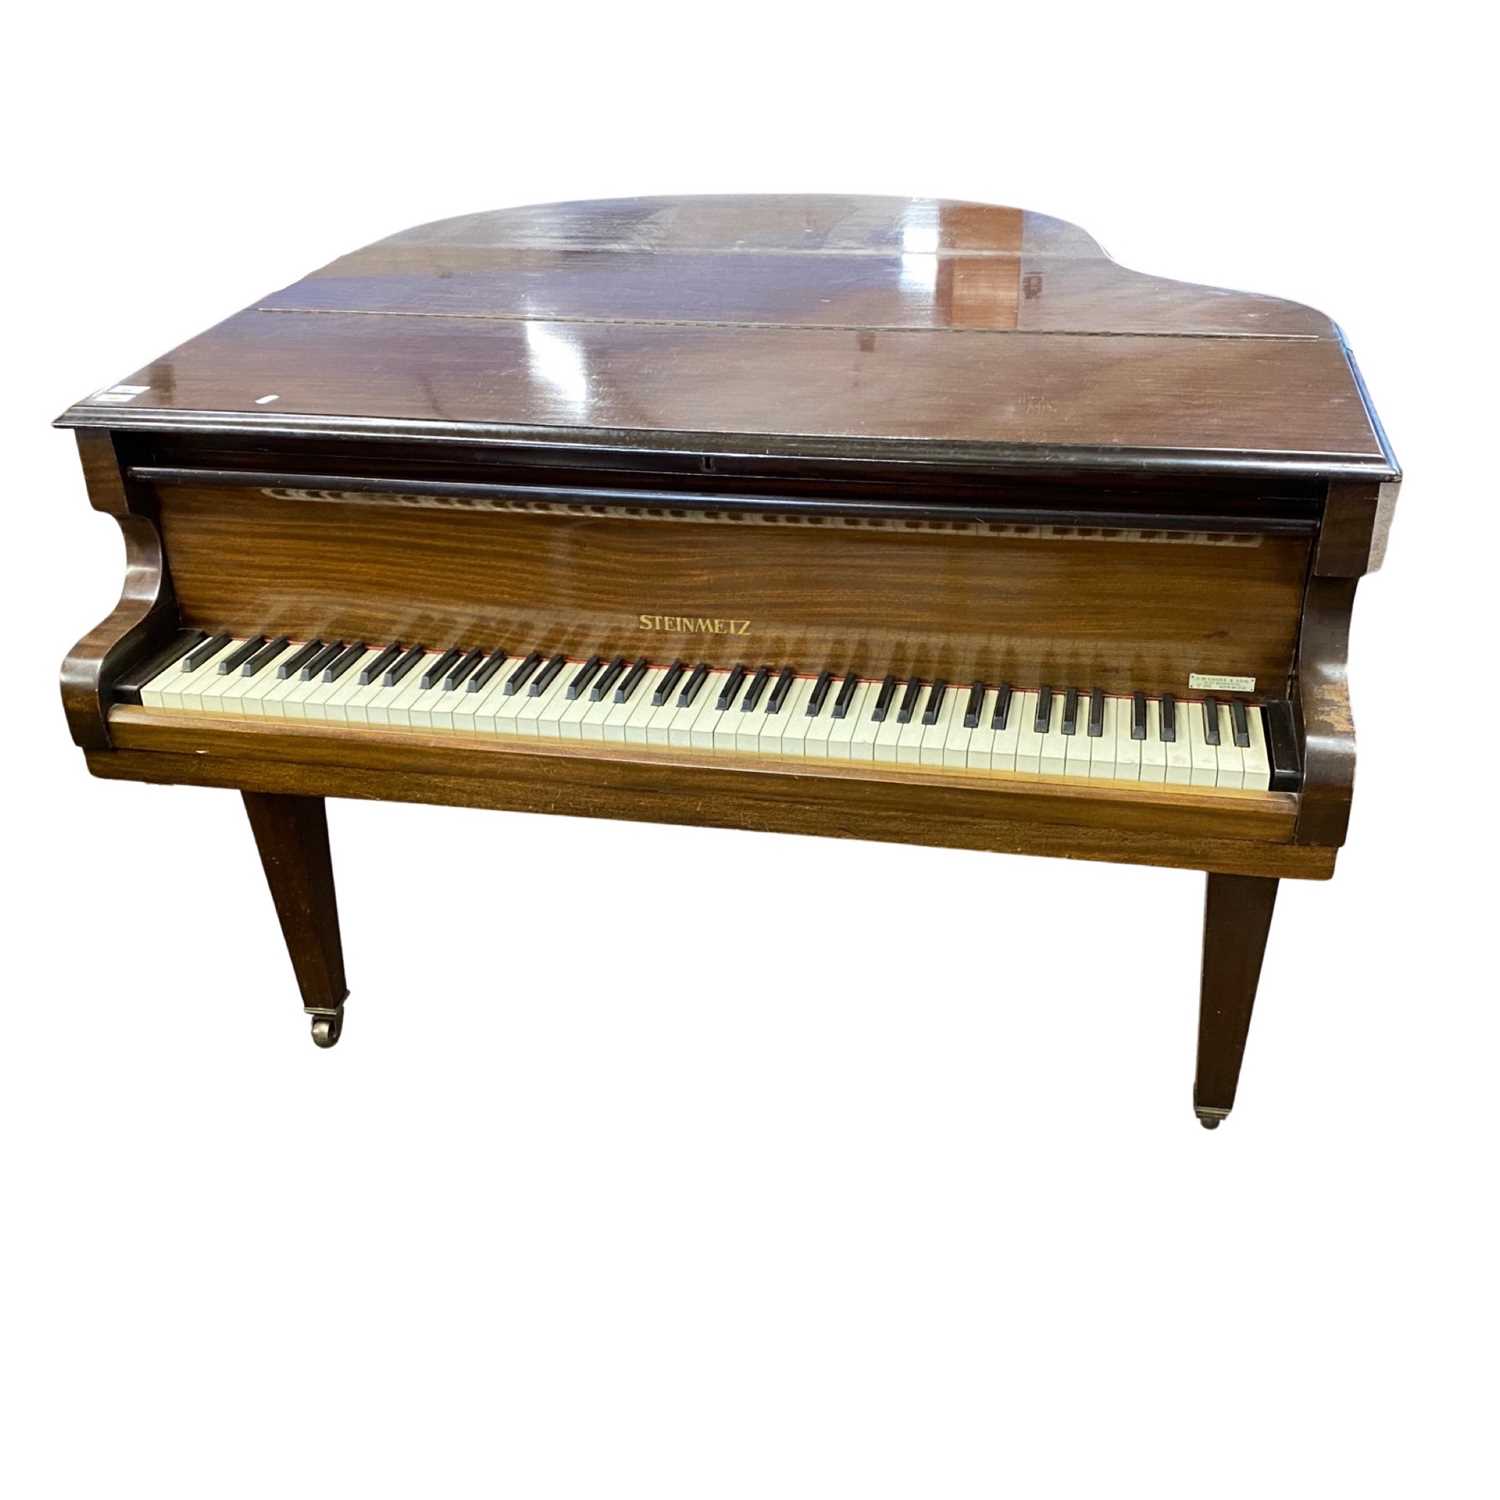 Steinmetz mahogany cased baby grand piano, 135cm side - Image 2 of 6